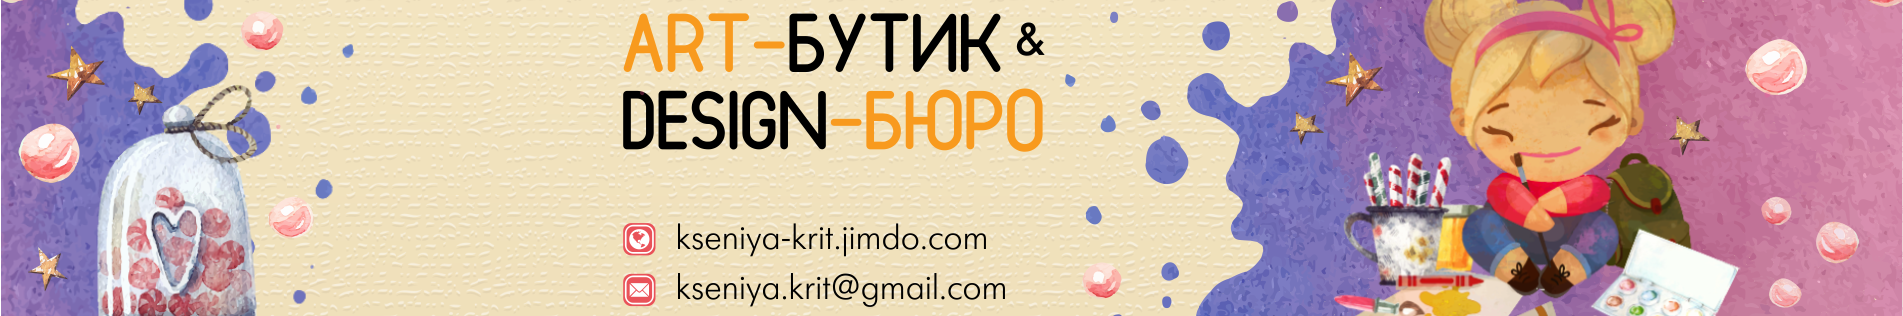 Banner de perfil de Kseniya Krit